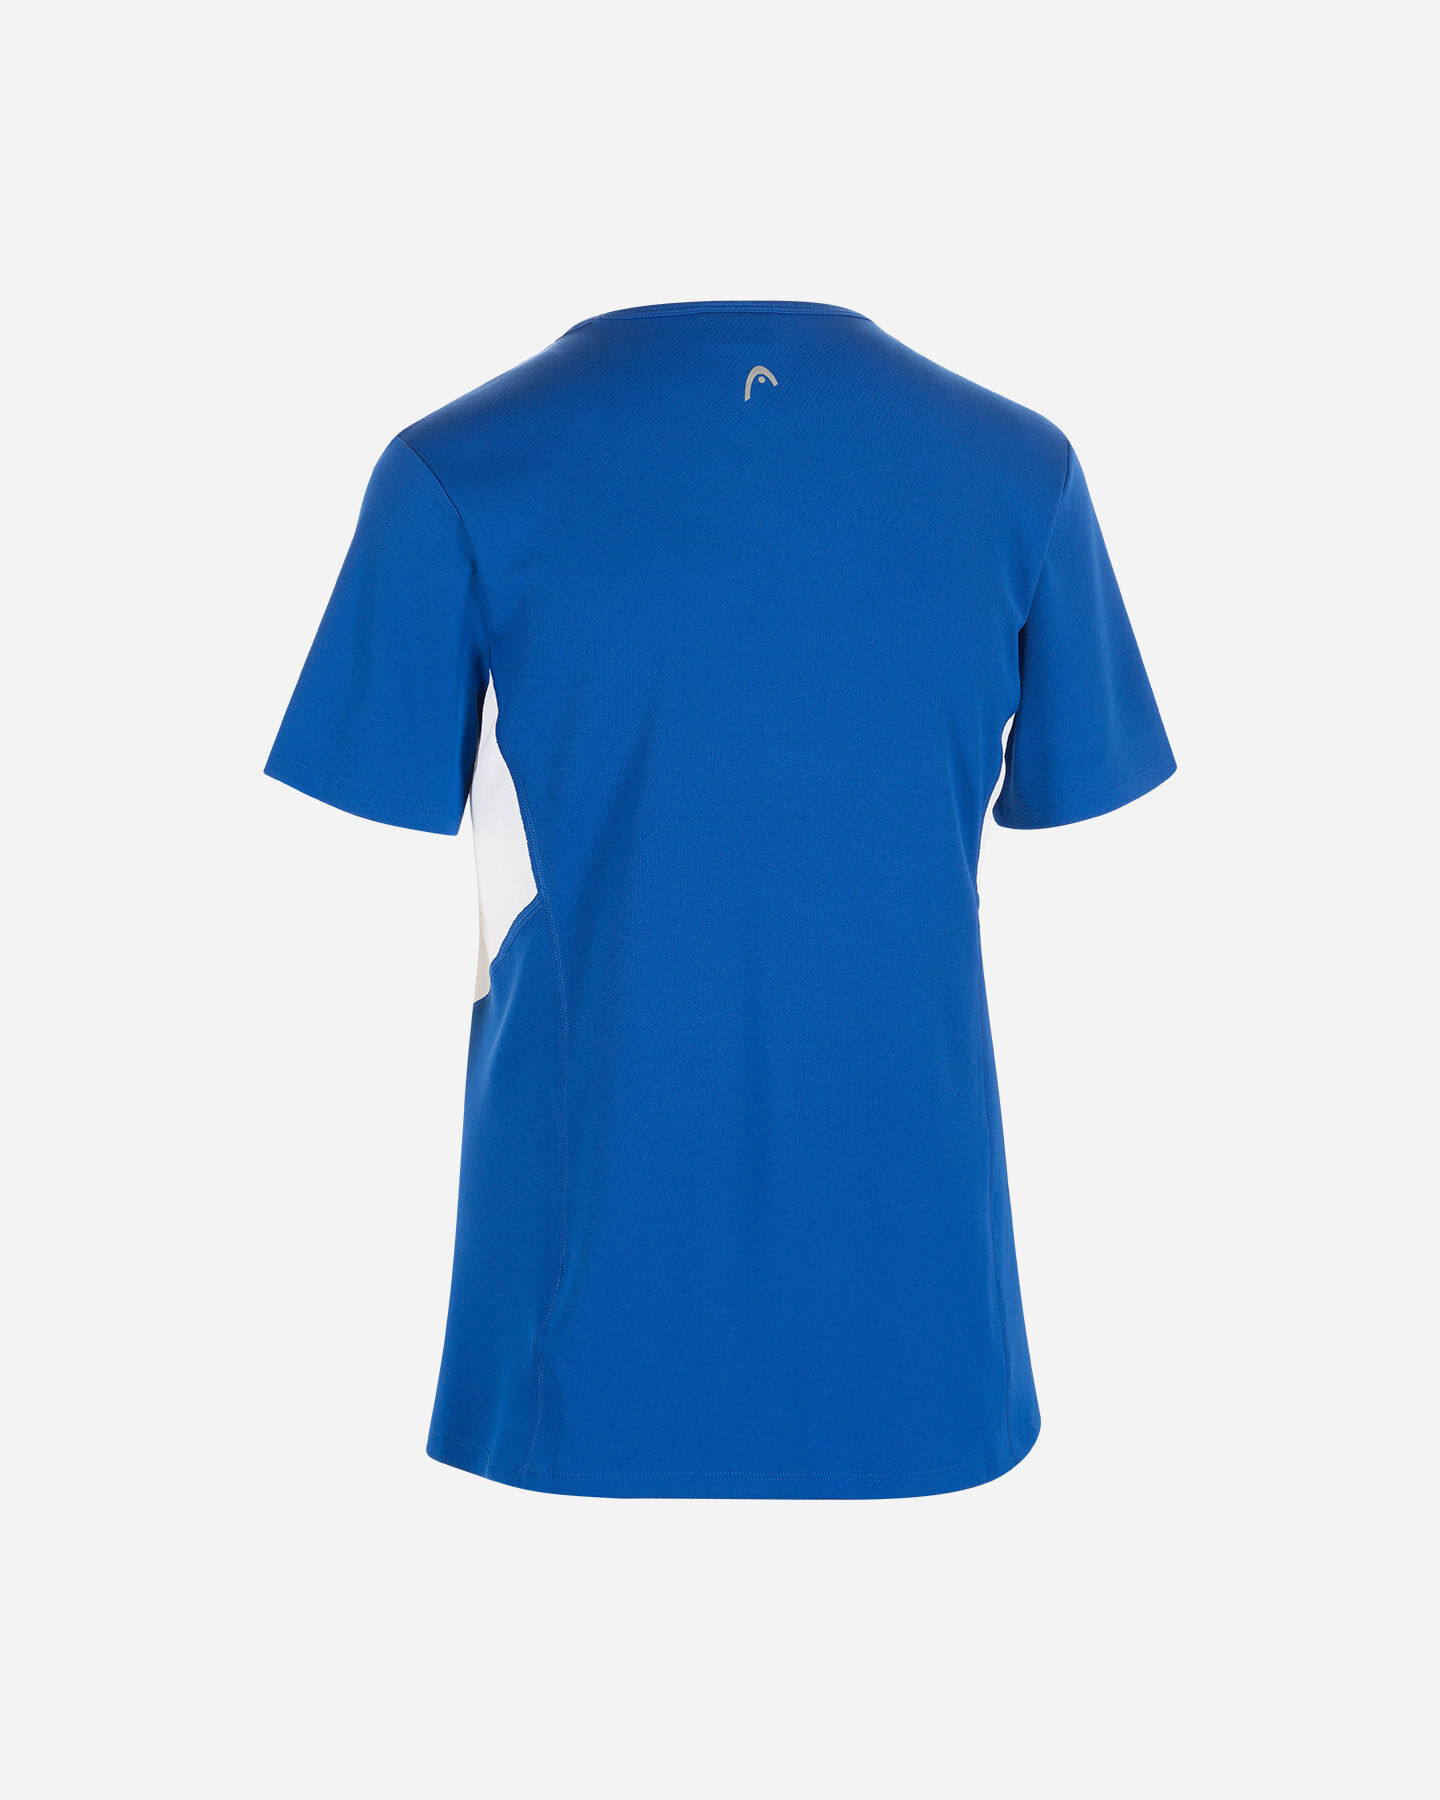  T-Shirt tennis HEAD CLUB TECH W S5142871|RO|XS scatto 1